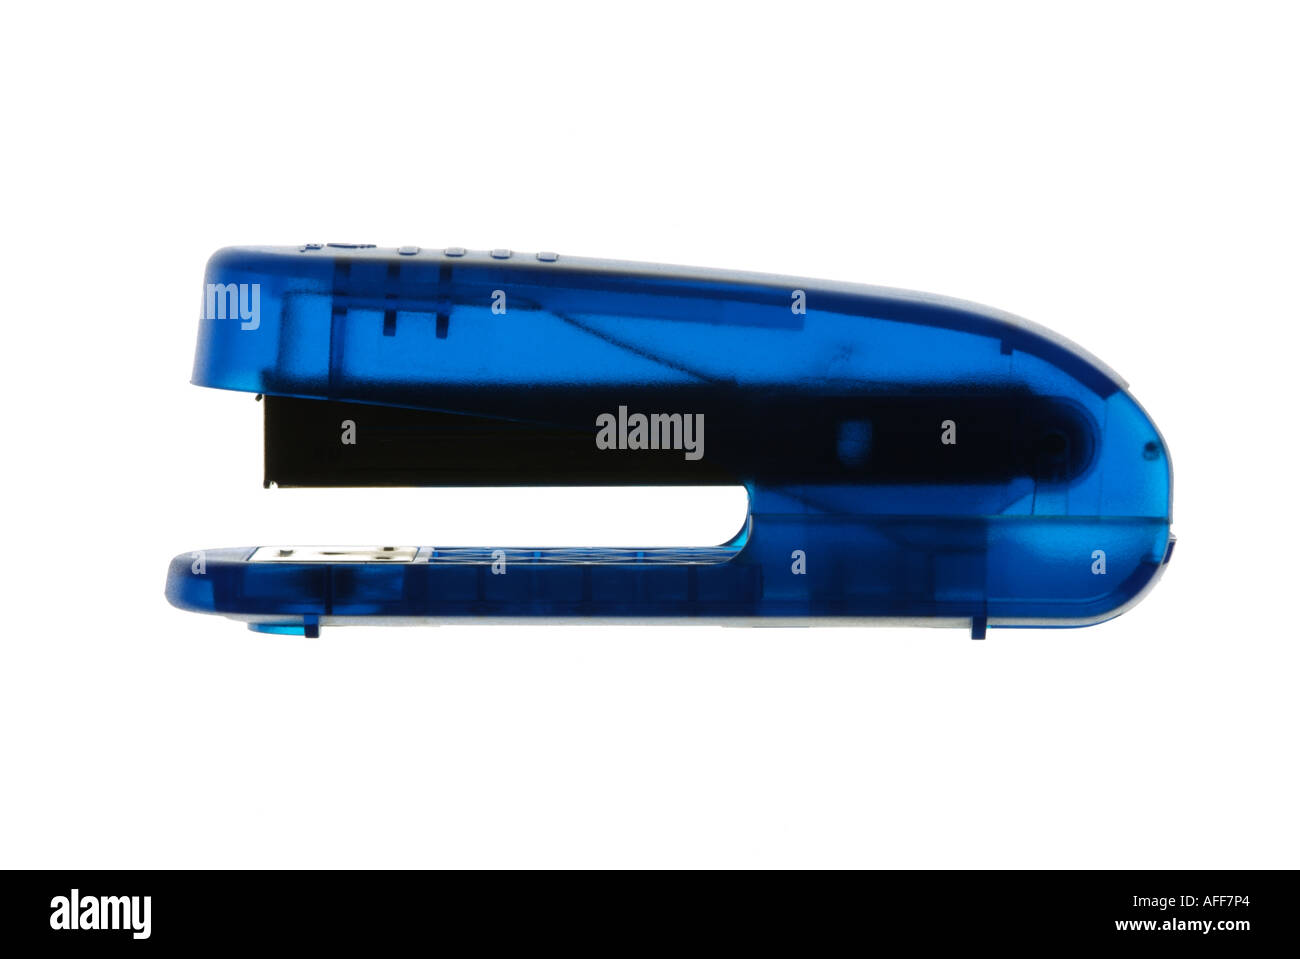 Blue paper stapler against a white background Stock Photo